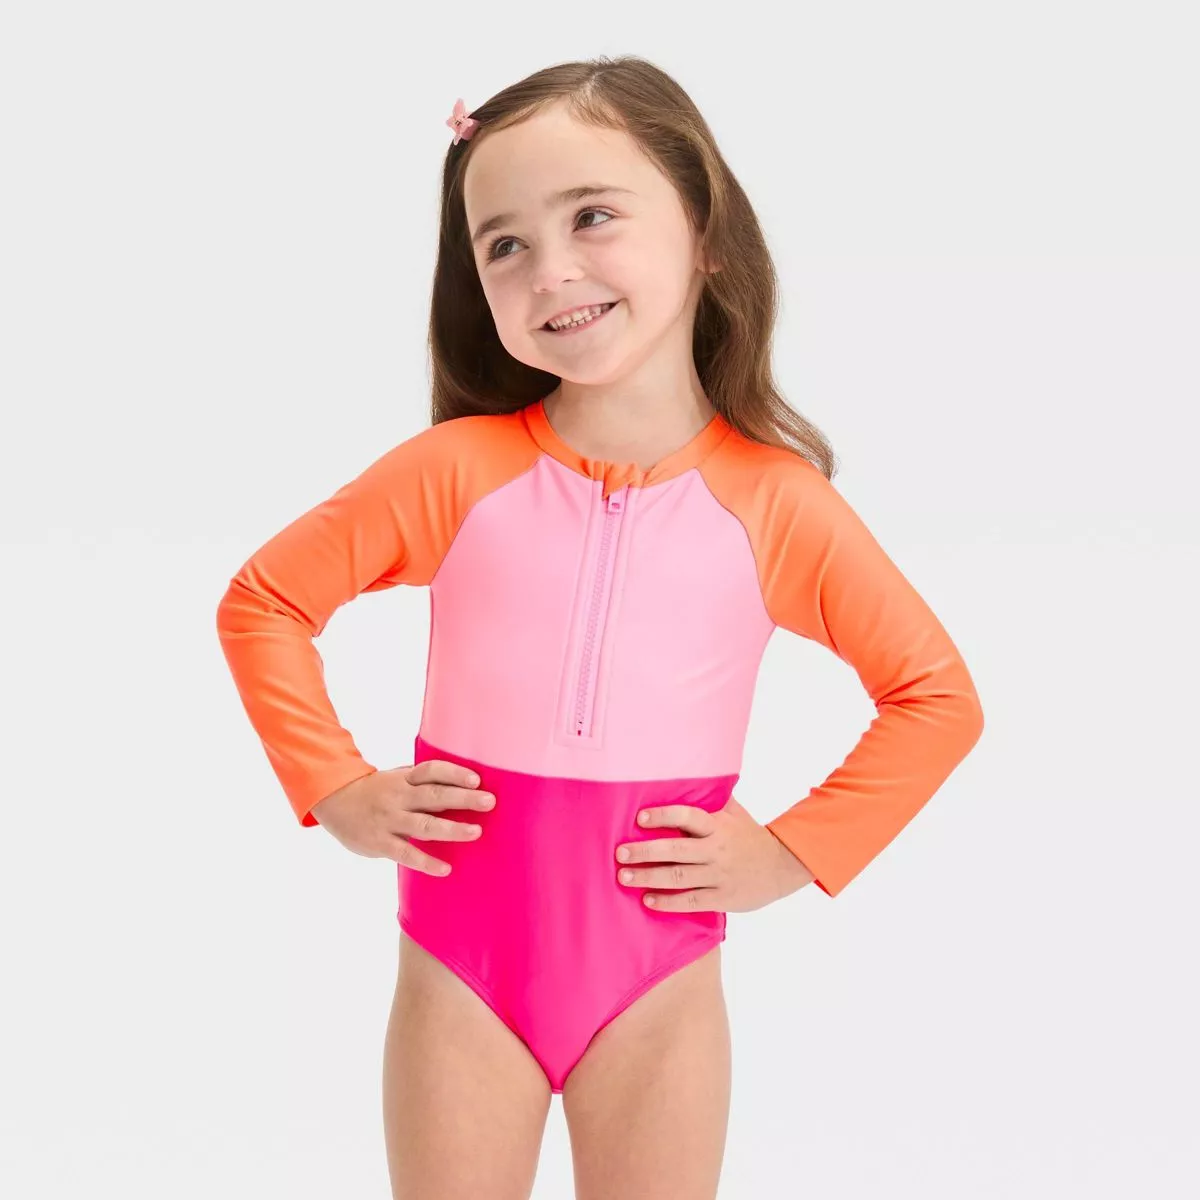 Toddler Girls' Bluey Peplum Checkered One Piece Swimsuit - Off